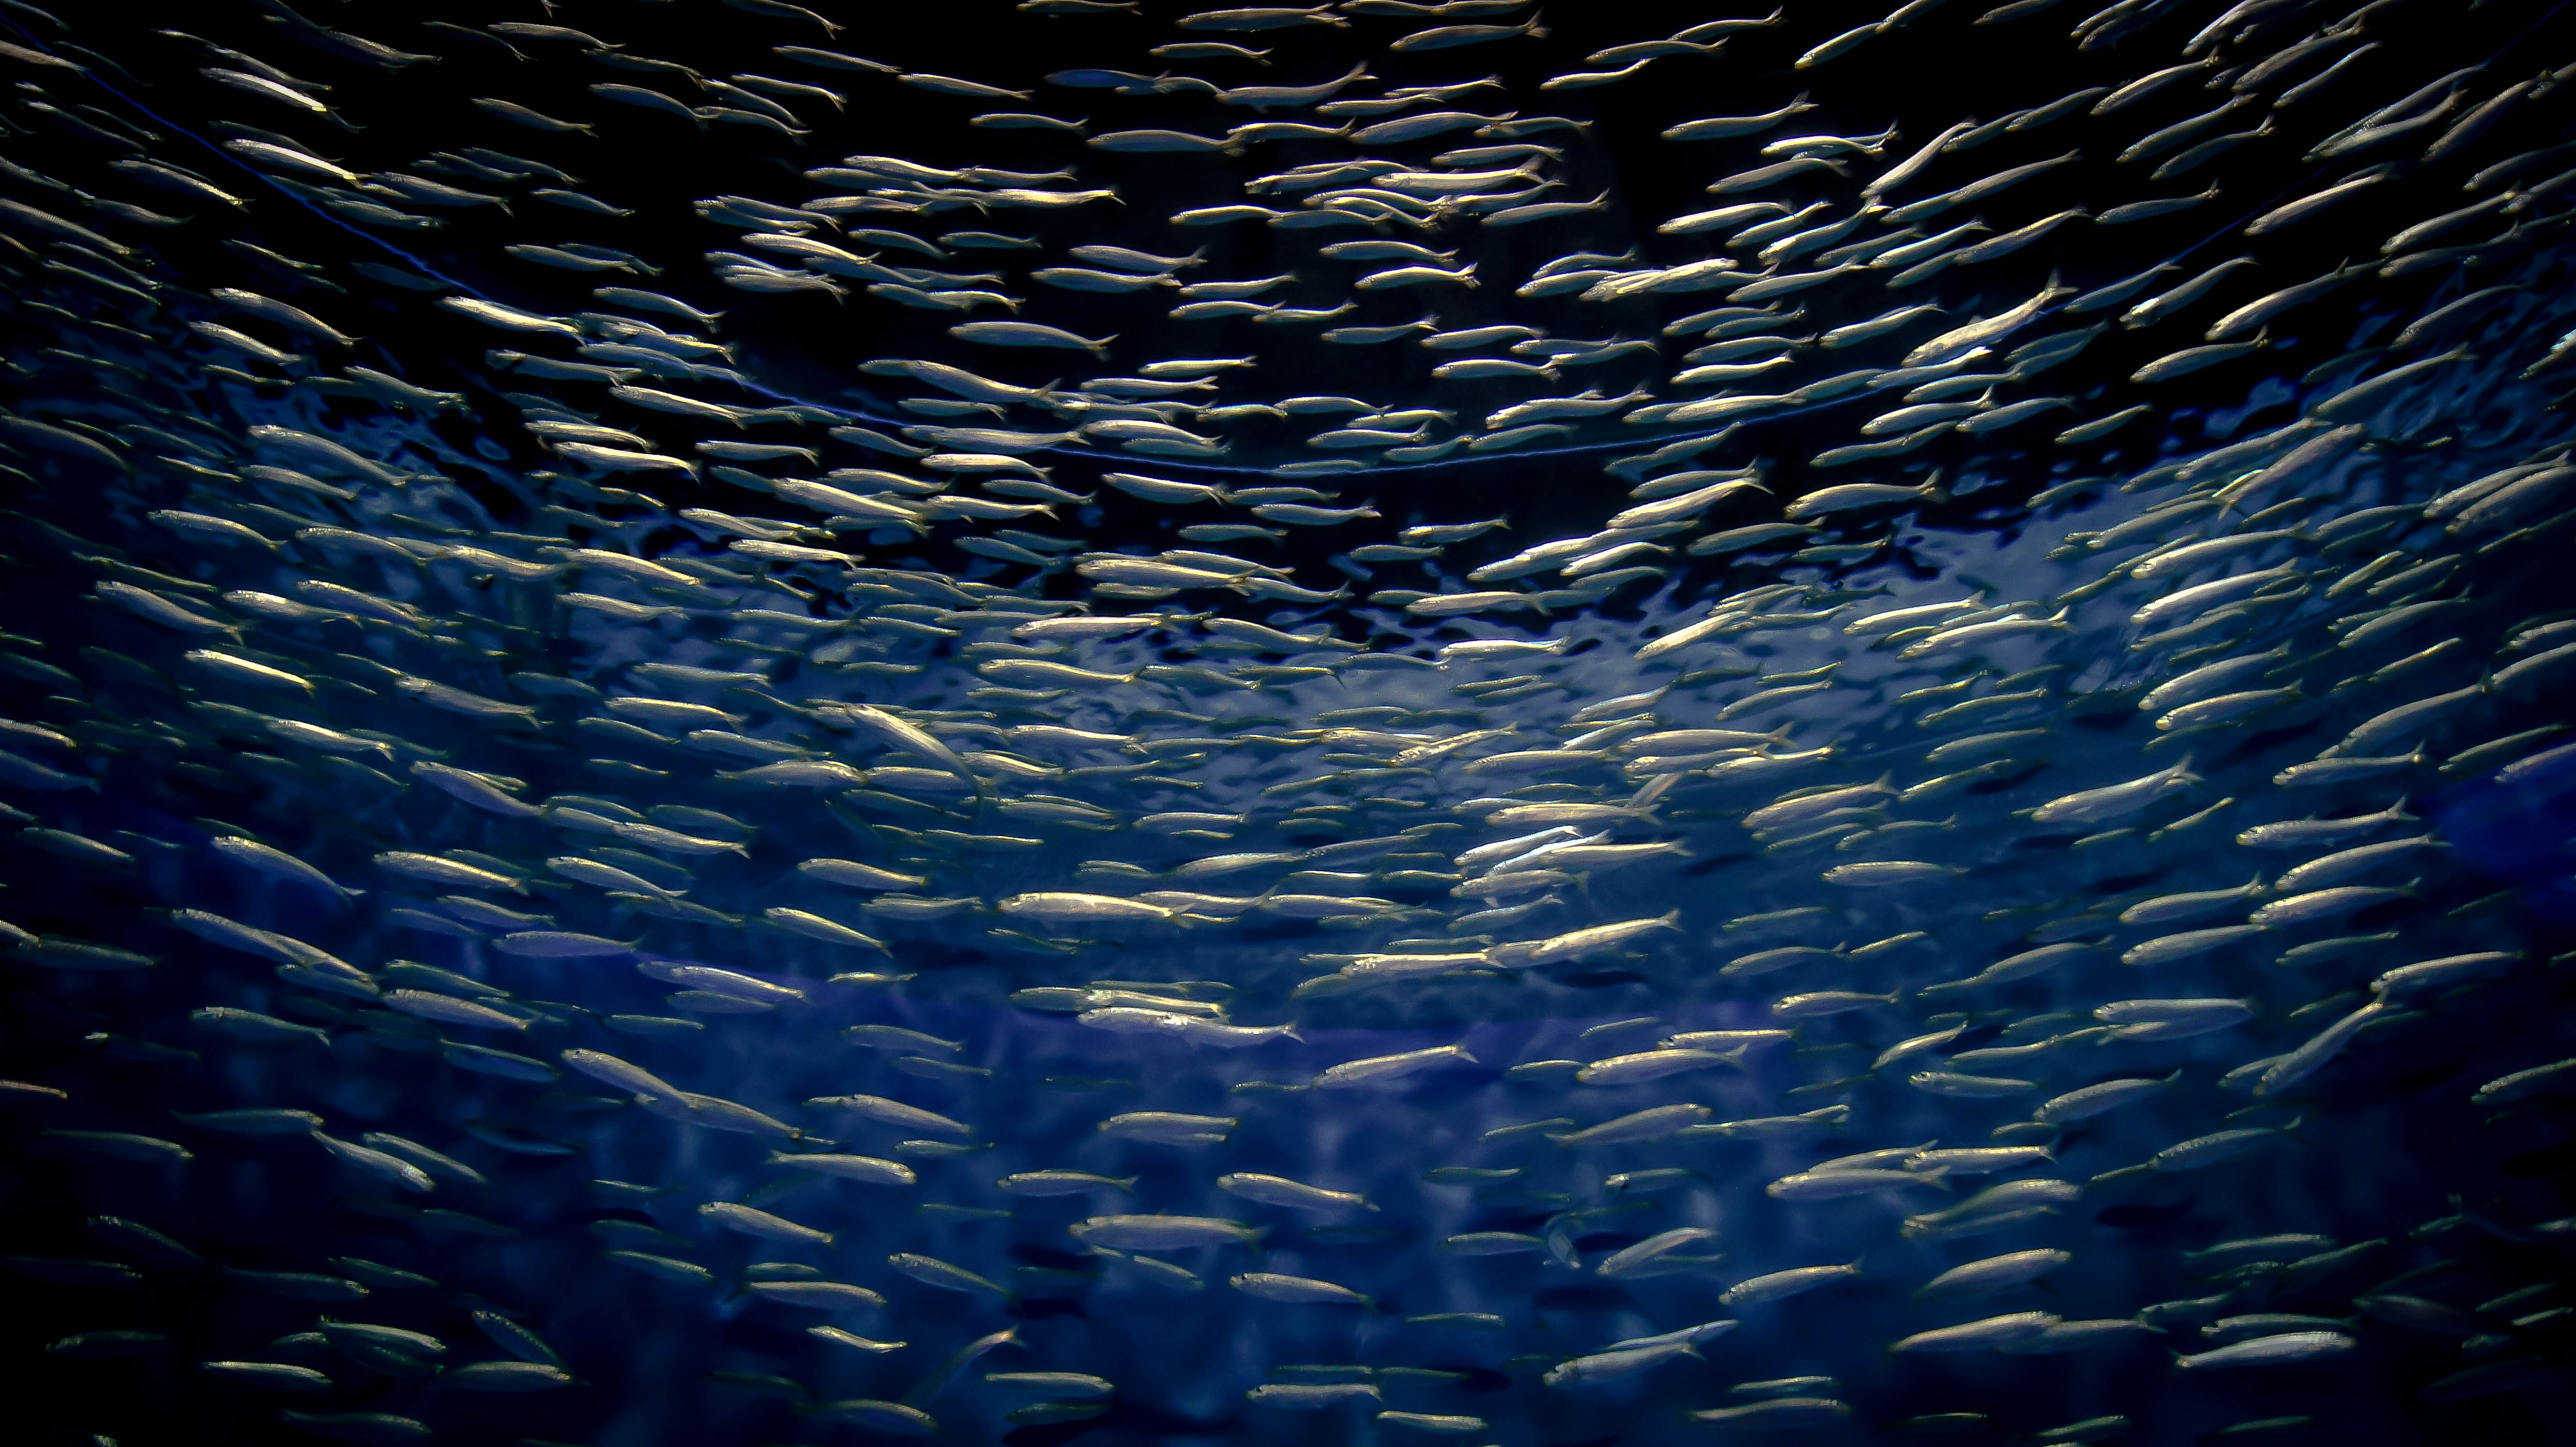 Pacific sardines swimming in a ceiling tank at the Monterey Bay Aquarium, illustrating awe-inspiring worlds (image © Sam Anaya A.).